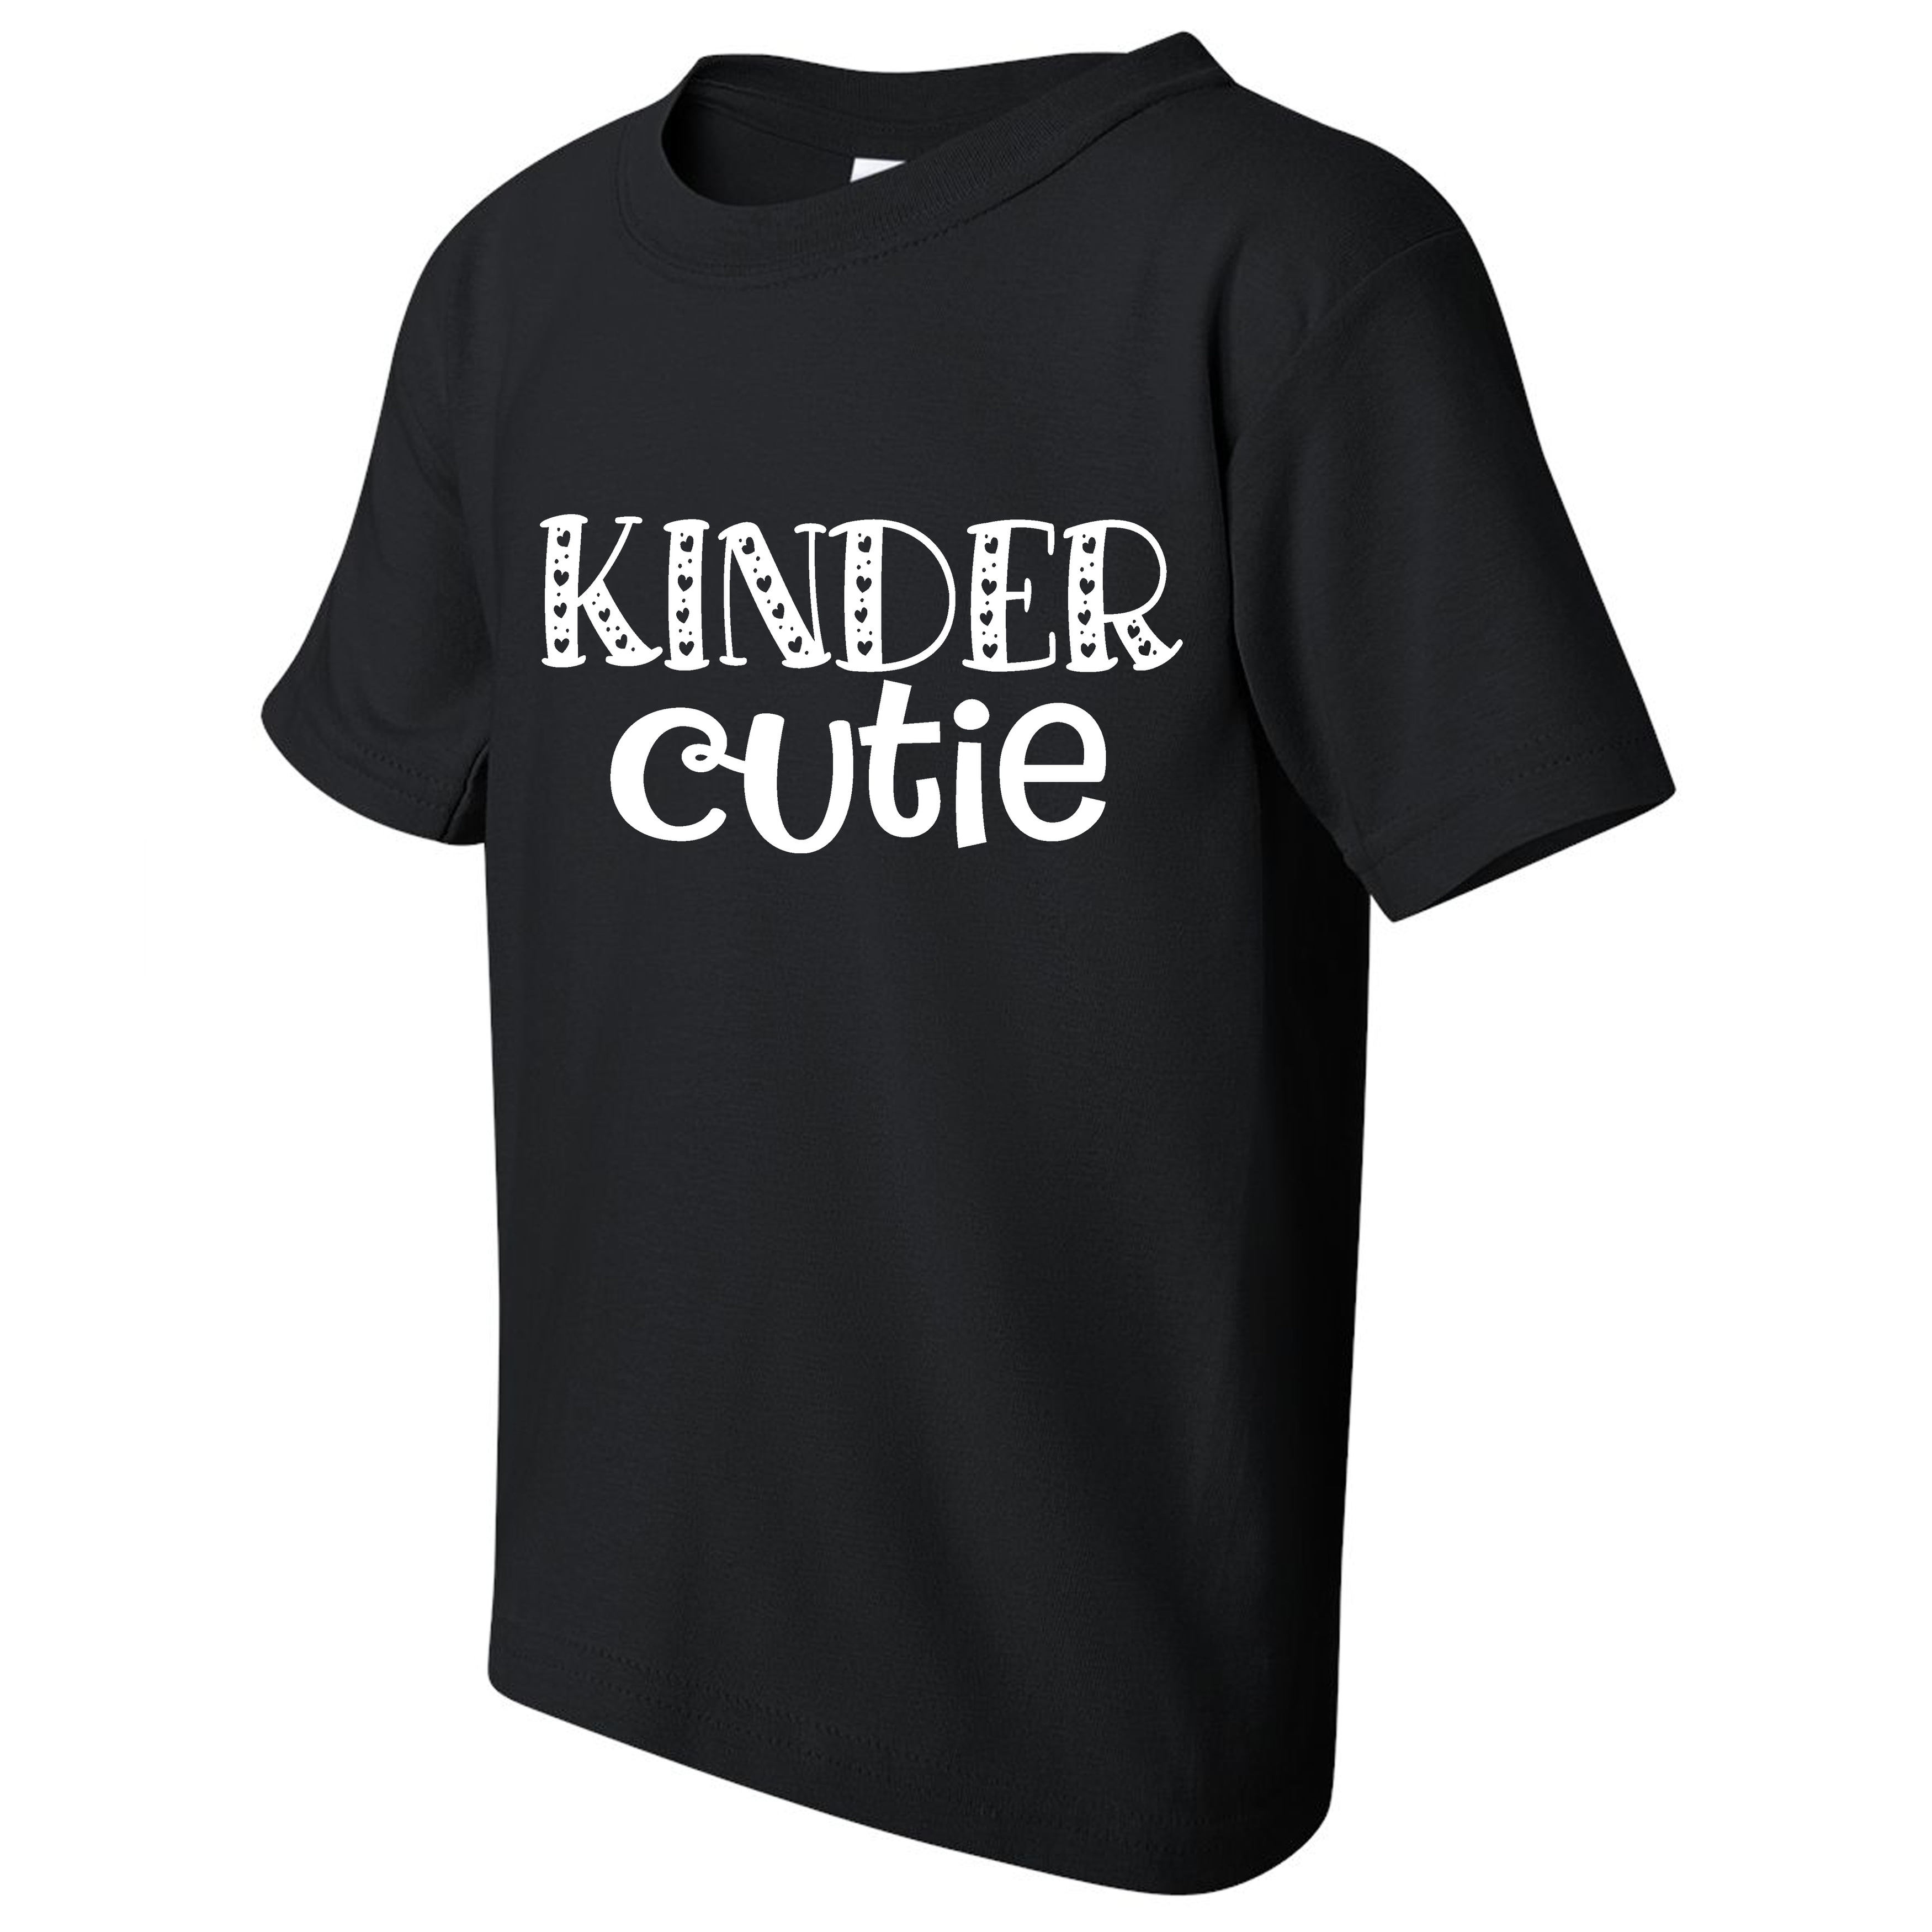 Kinder Cutie Kid's Kindergarten Funny Black T-shirt with Saying